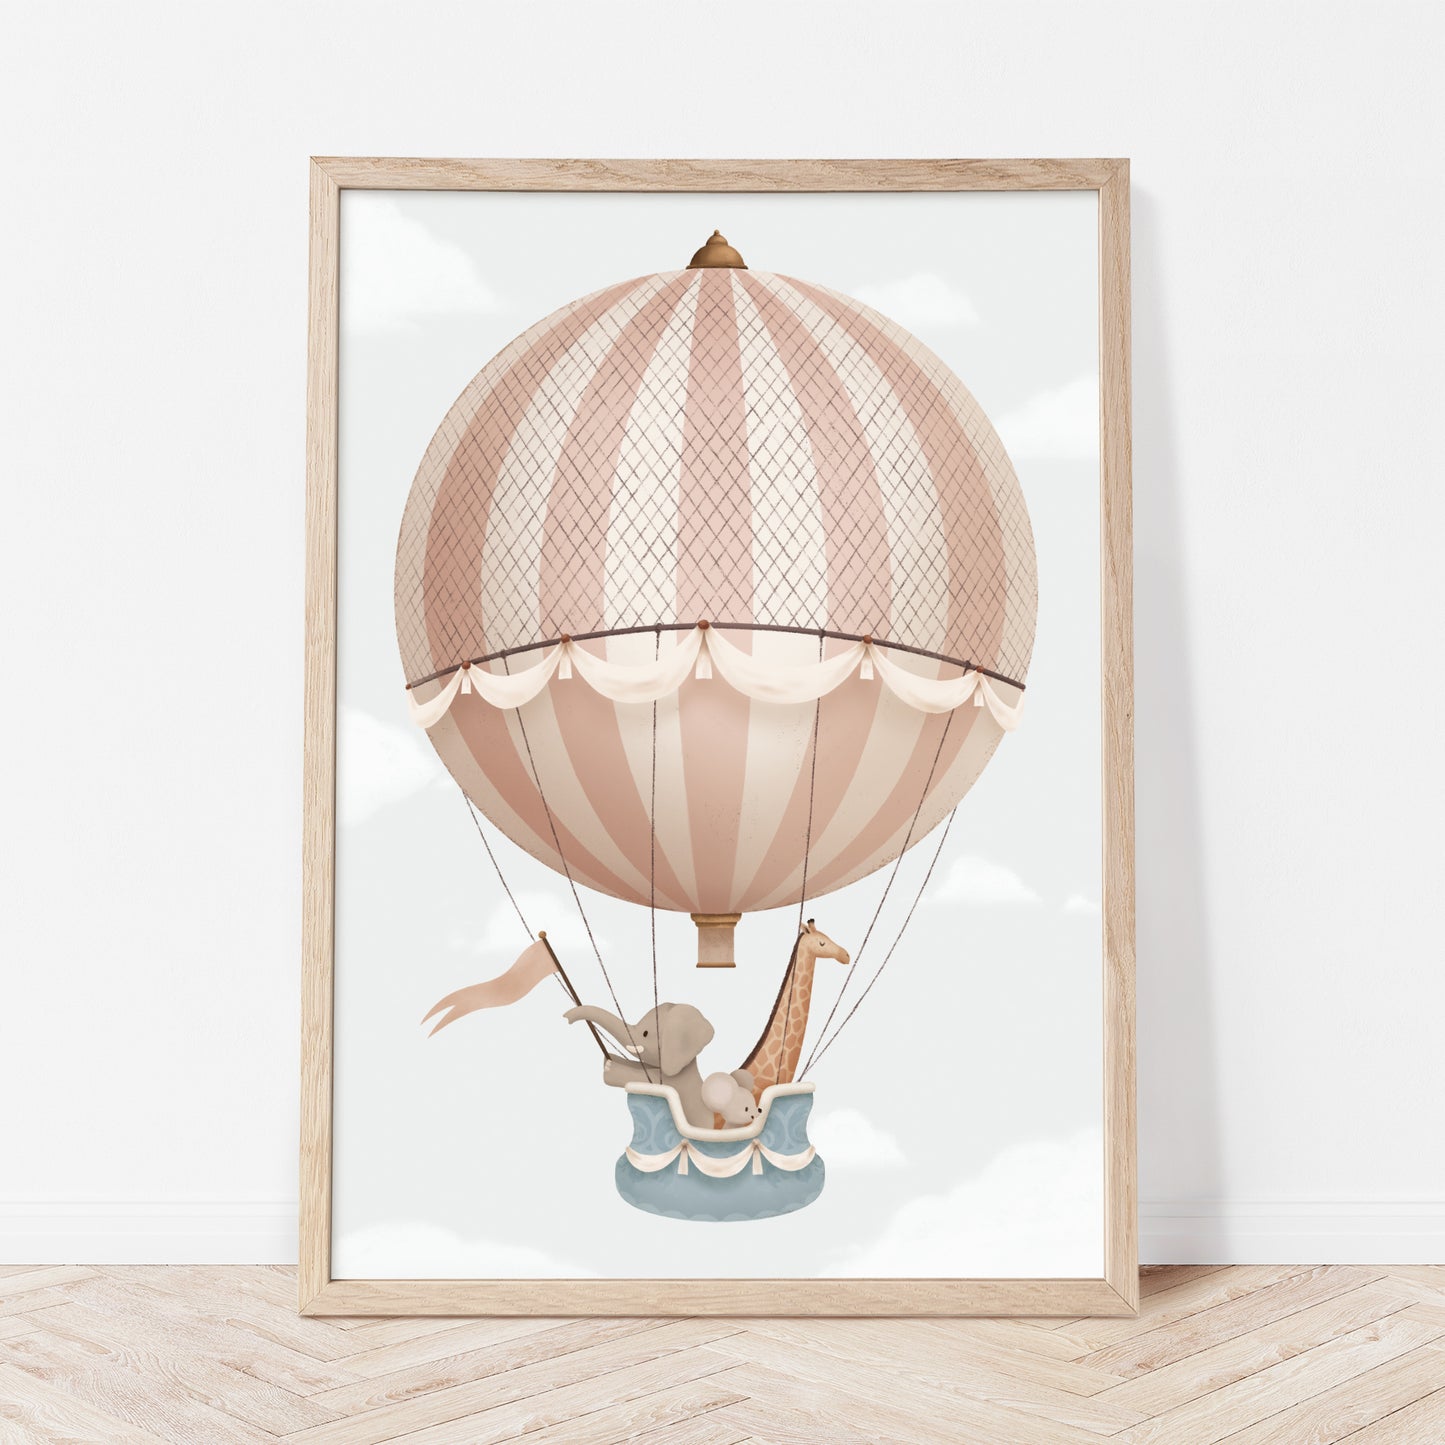 Magical journey on an air balloon